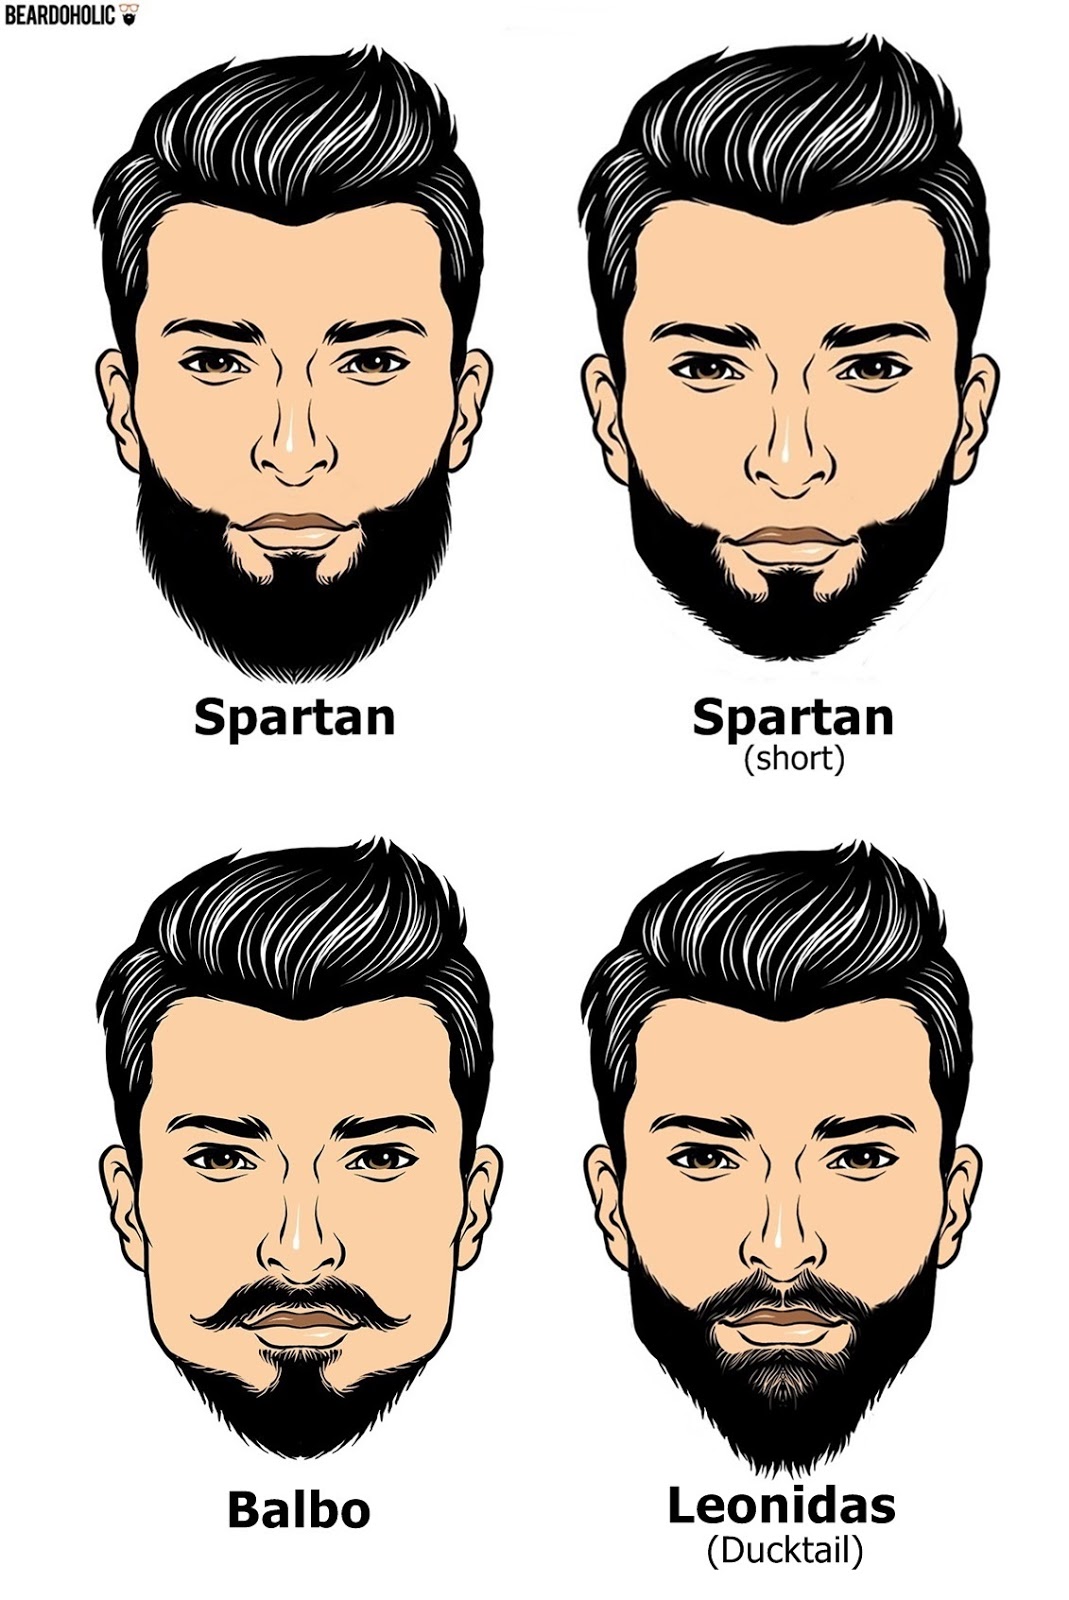 Prazdny Myslim Ze Jsem Nemocny Ostrov Alcatraz Spartan Beard Style Richmondfuture Org